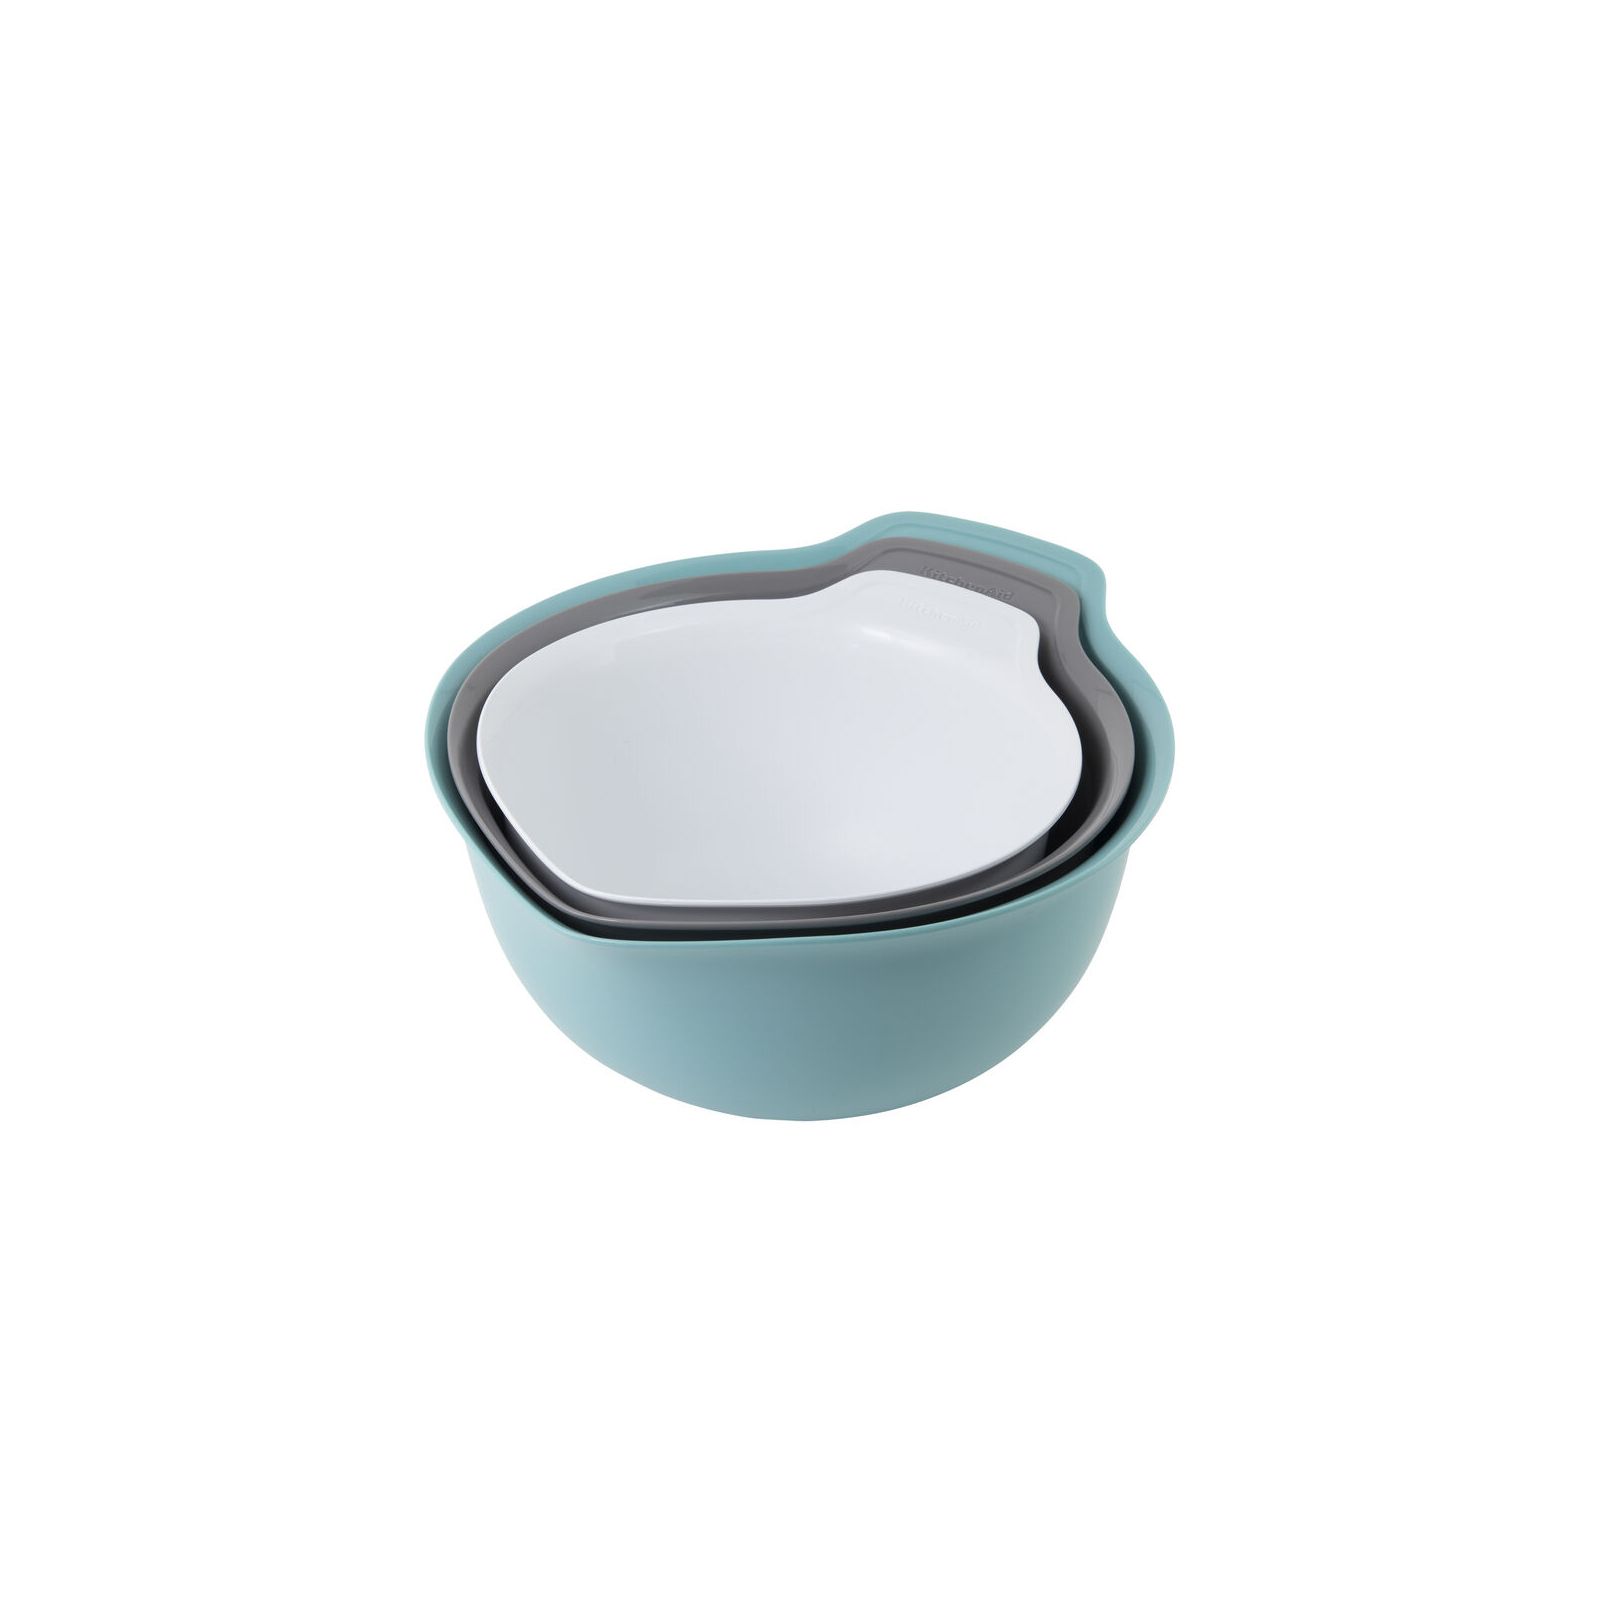 KitchenAid Universal Mixing Bowls Set Of 3 - Assorted Colors